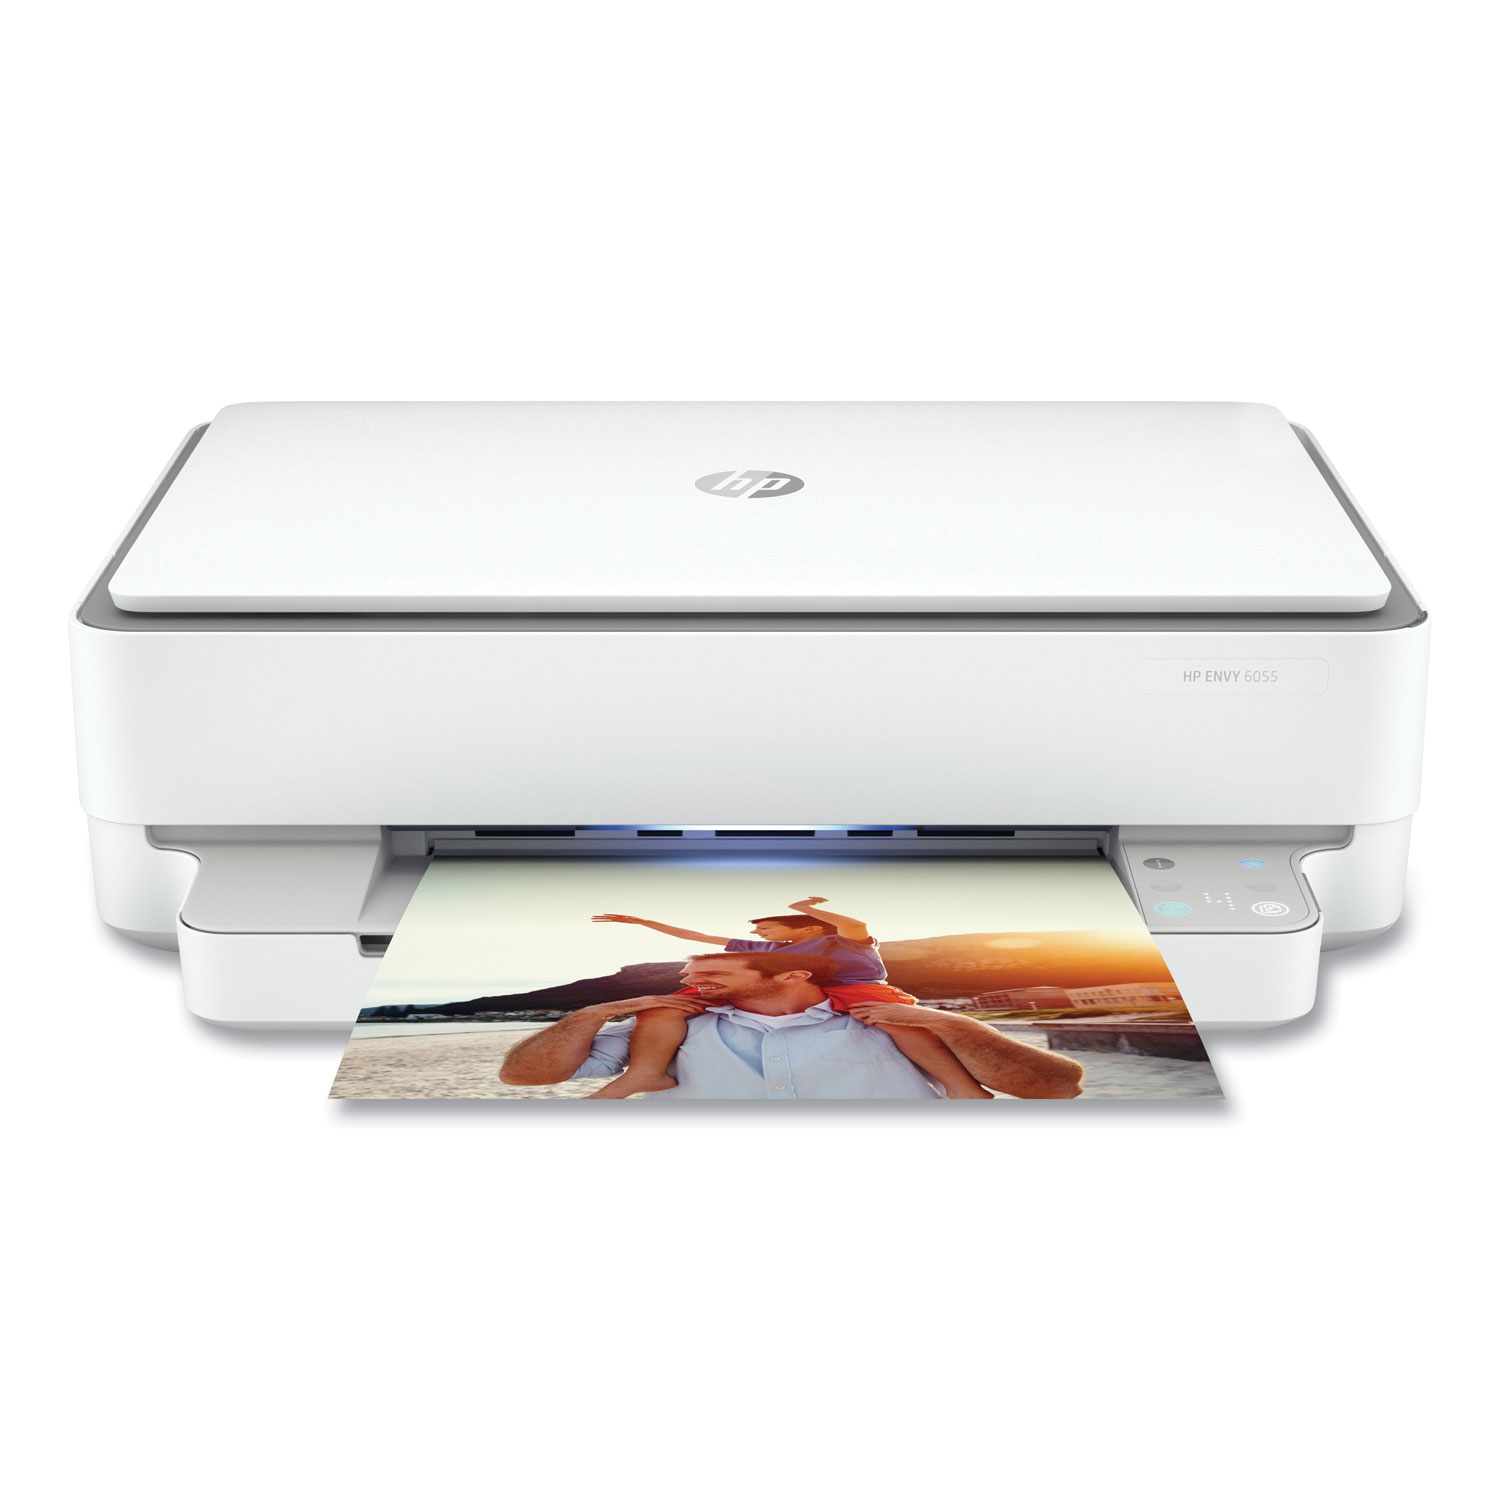  HP 5SE16A#B1F ENVY 6055 All-In-One Printer, Copy; Print; Scan (HEW5SE16A) 